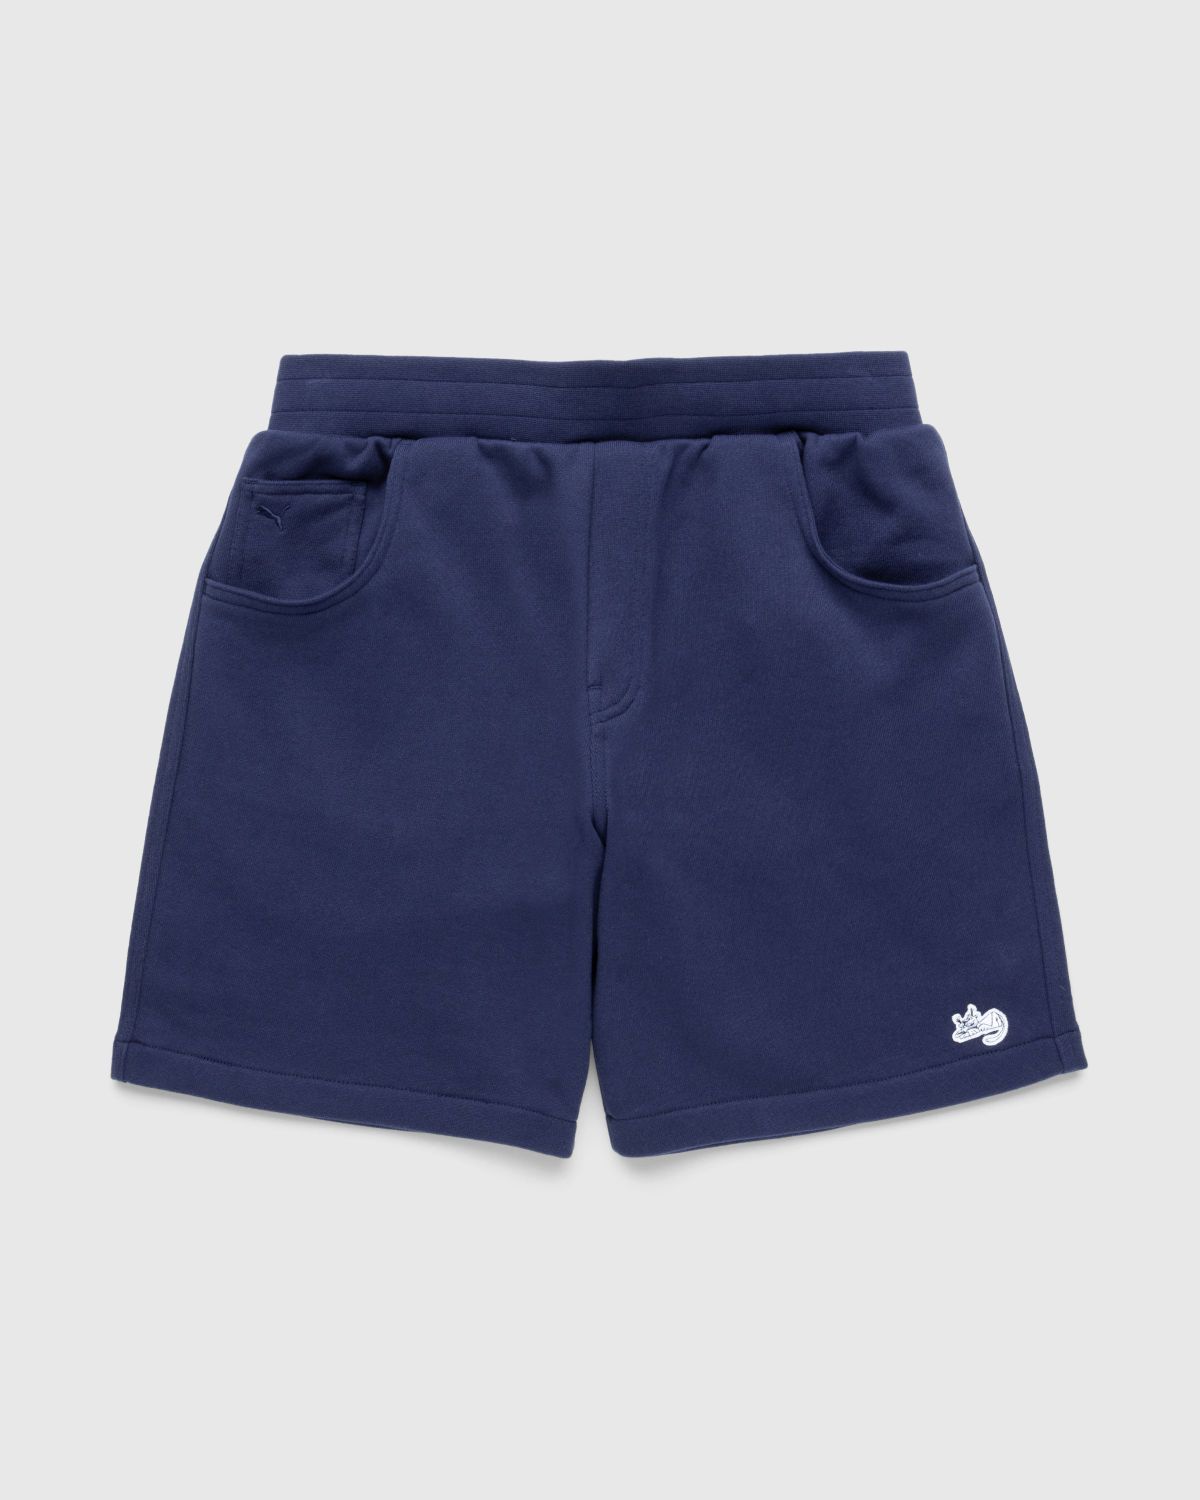 Puma x Noah – Shorts Blue - Shorts - Blue - Image 1